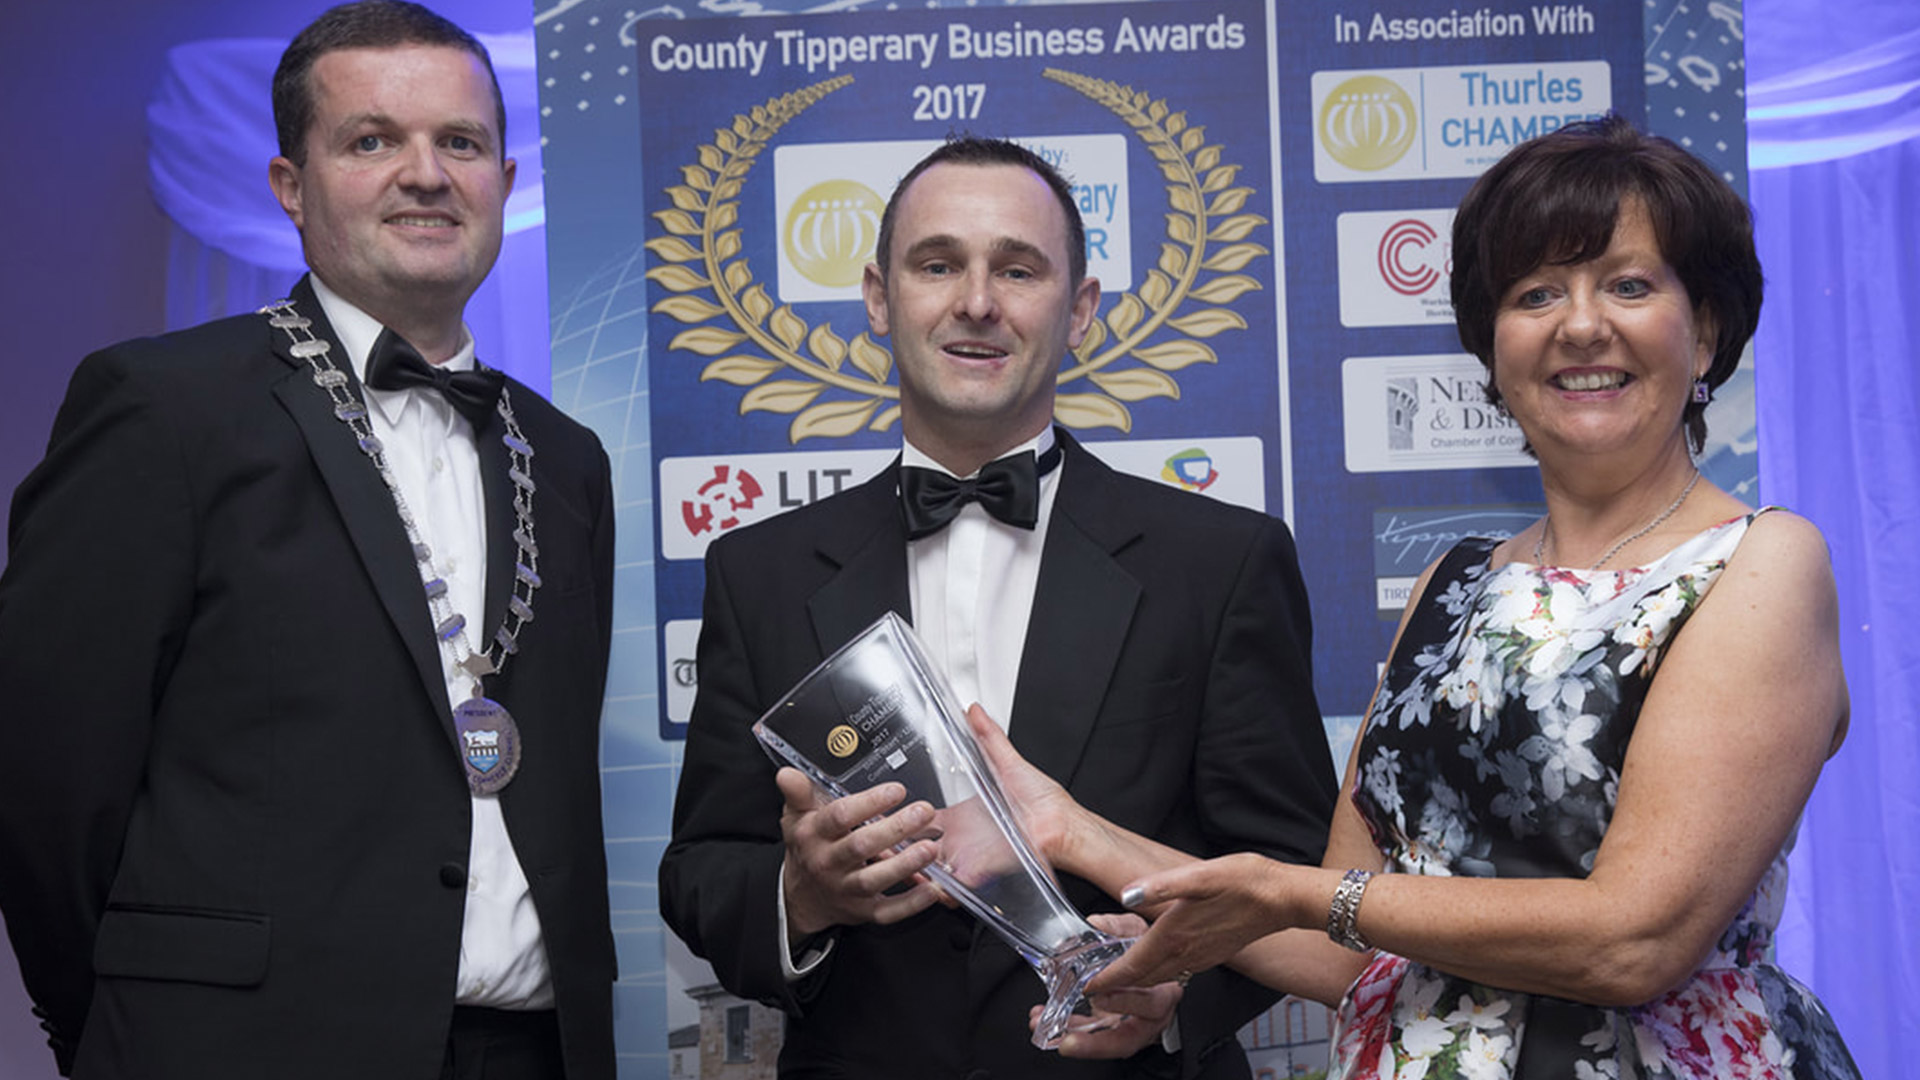 Brodeen Engineering Best Start-up Business Tipperary awards 2017